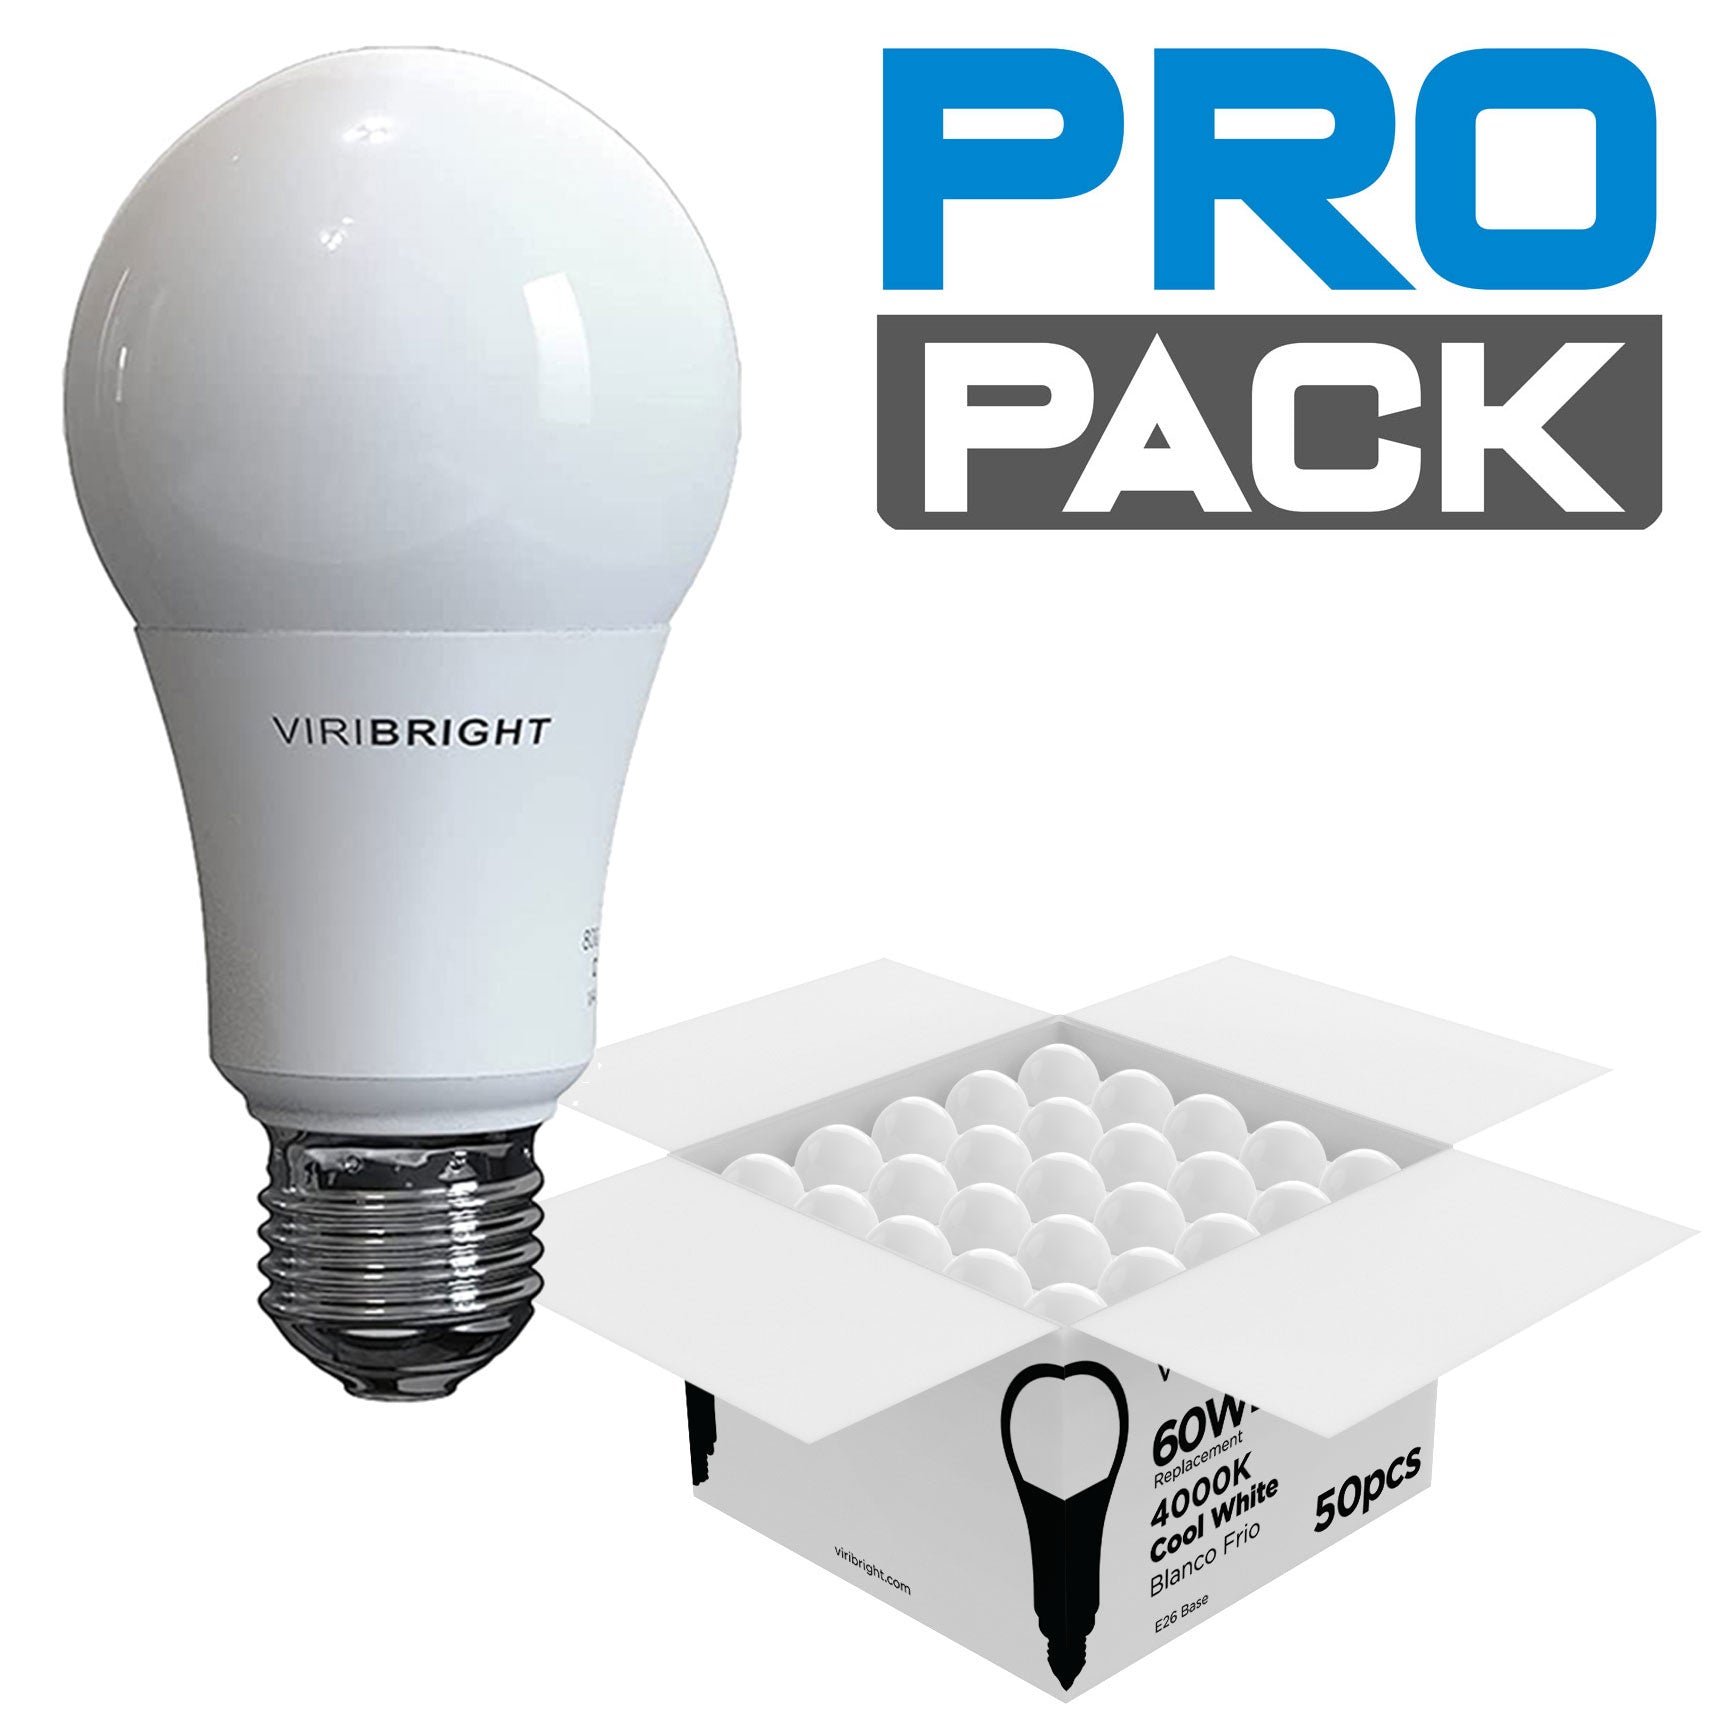 Viribright contractor pro packs A19 E26 light bulbs